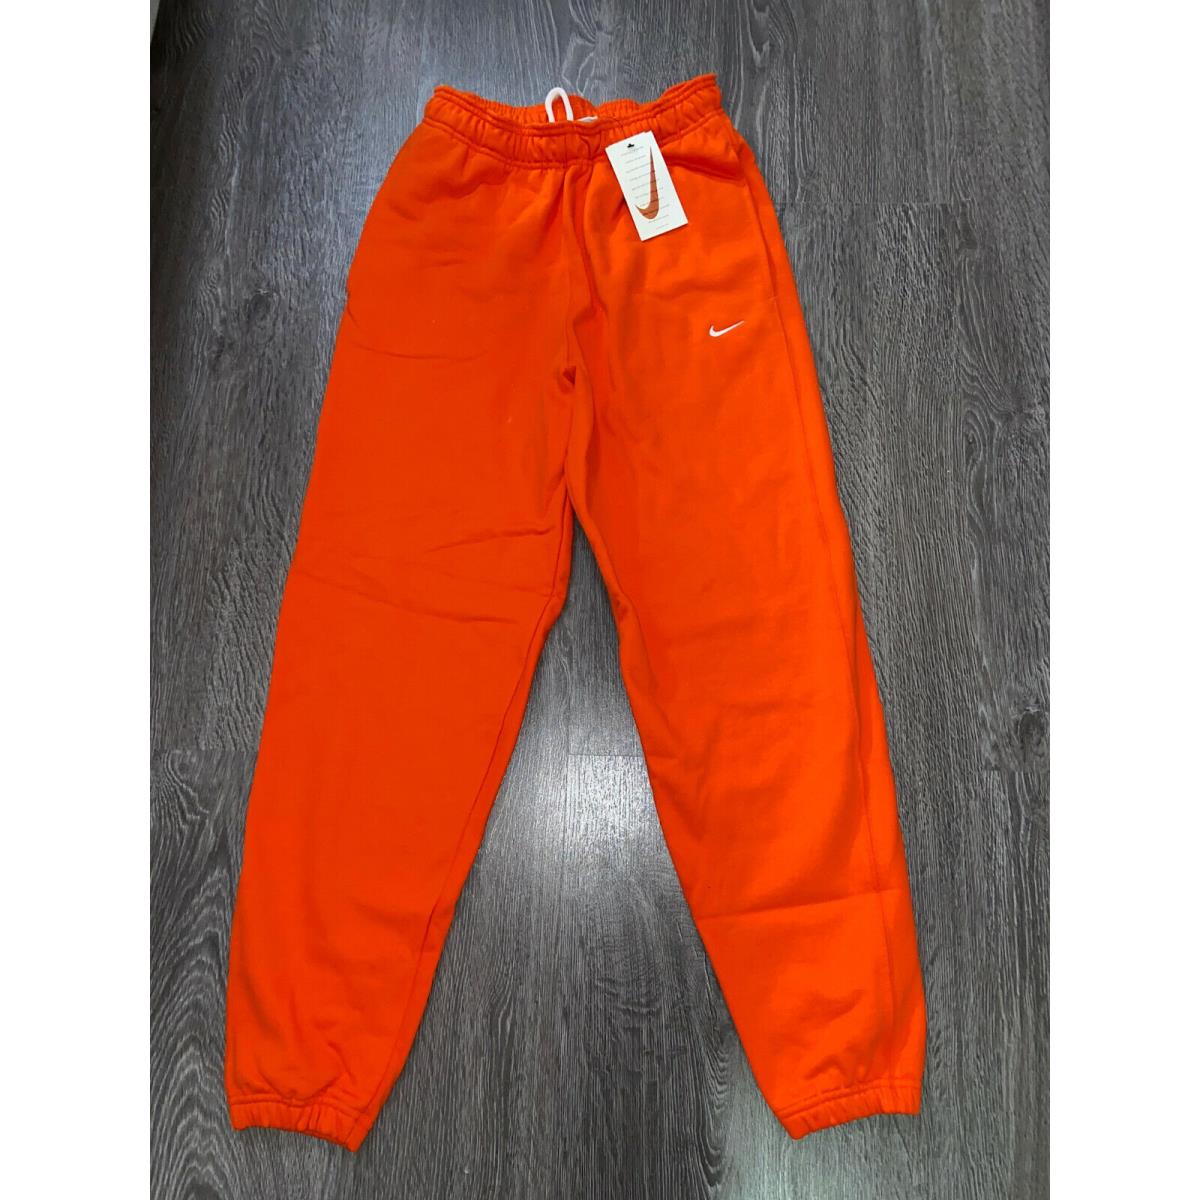 Nike Made in Usa Fleece Pants Joggers Sweatpants CQ4005-891 Orange Mens S